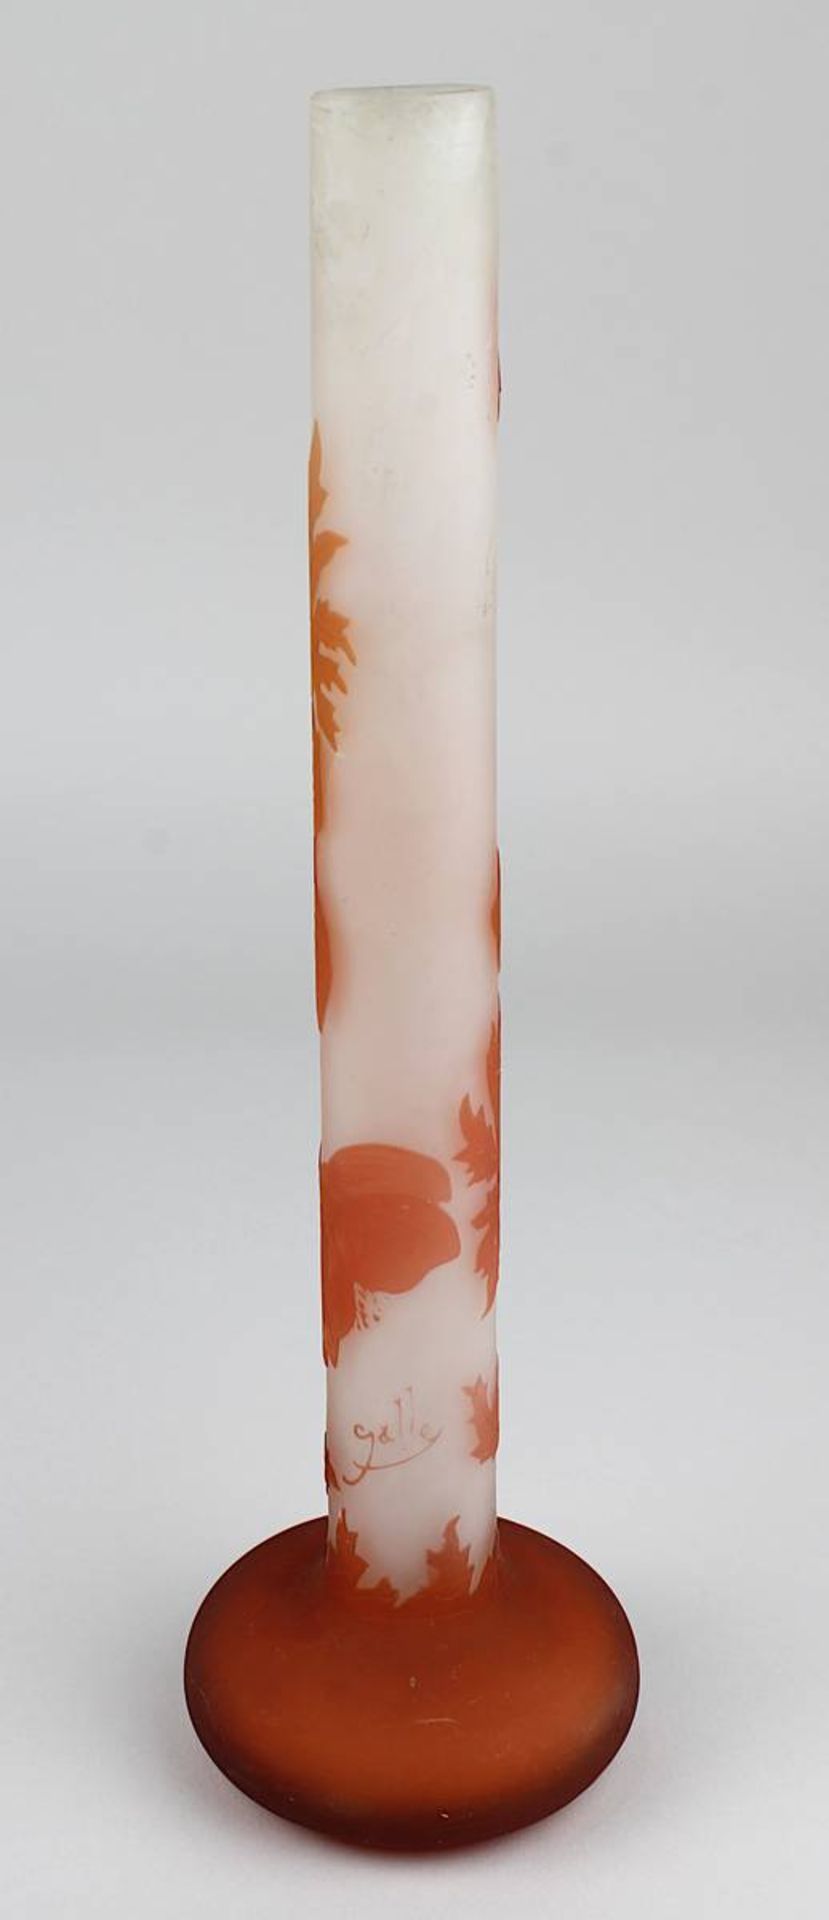 Jugendstil Gallé Stangen-Vase mit Mohndekor, Nancy 1906 - 1914, matt geätzter Klarglaskorpus, im - Image 3 of 4